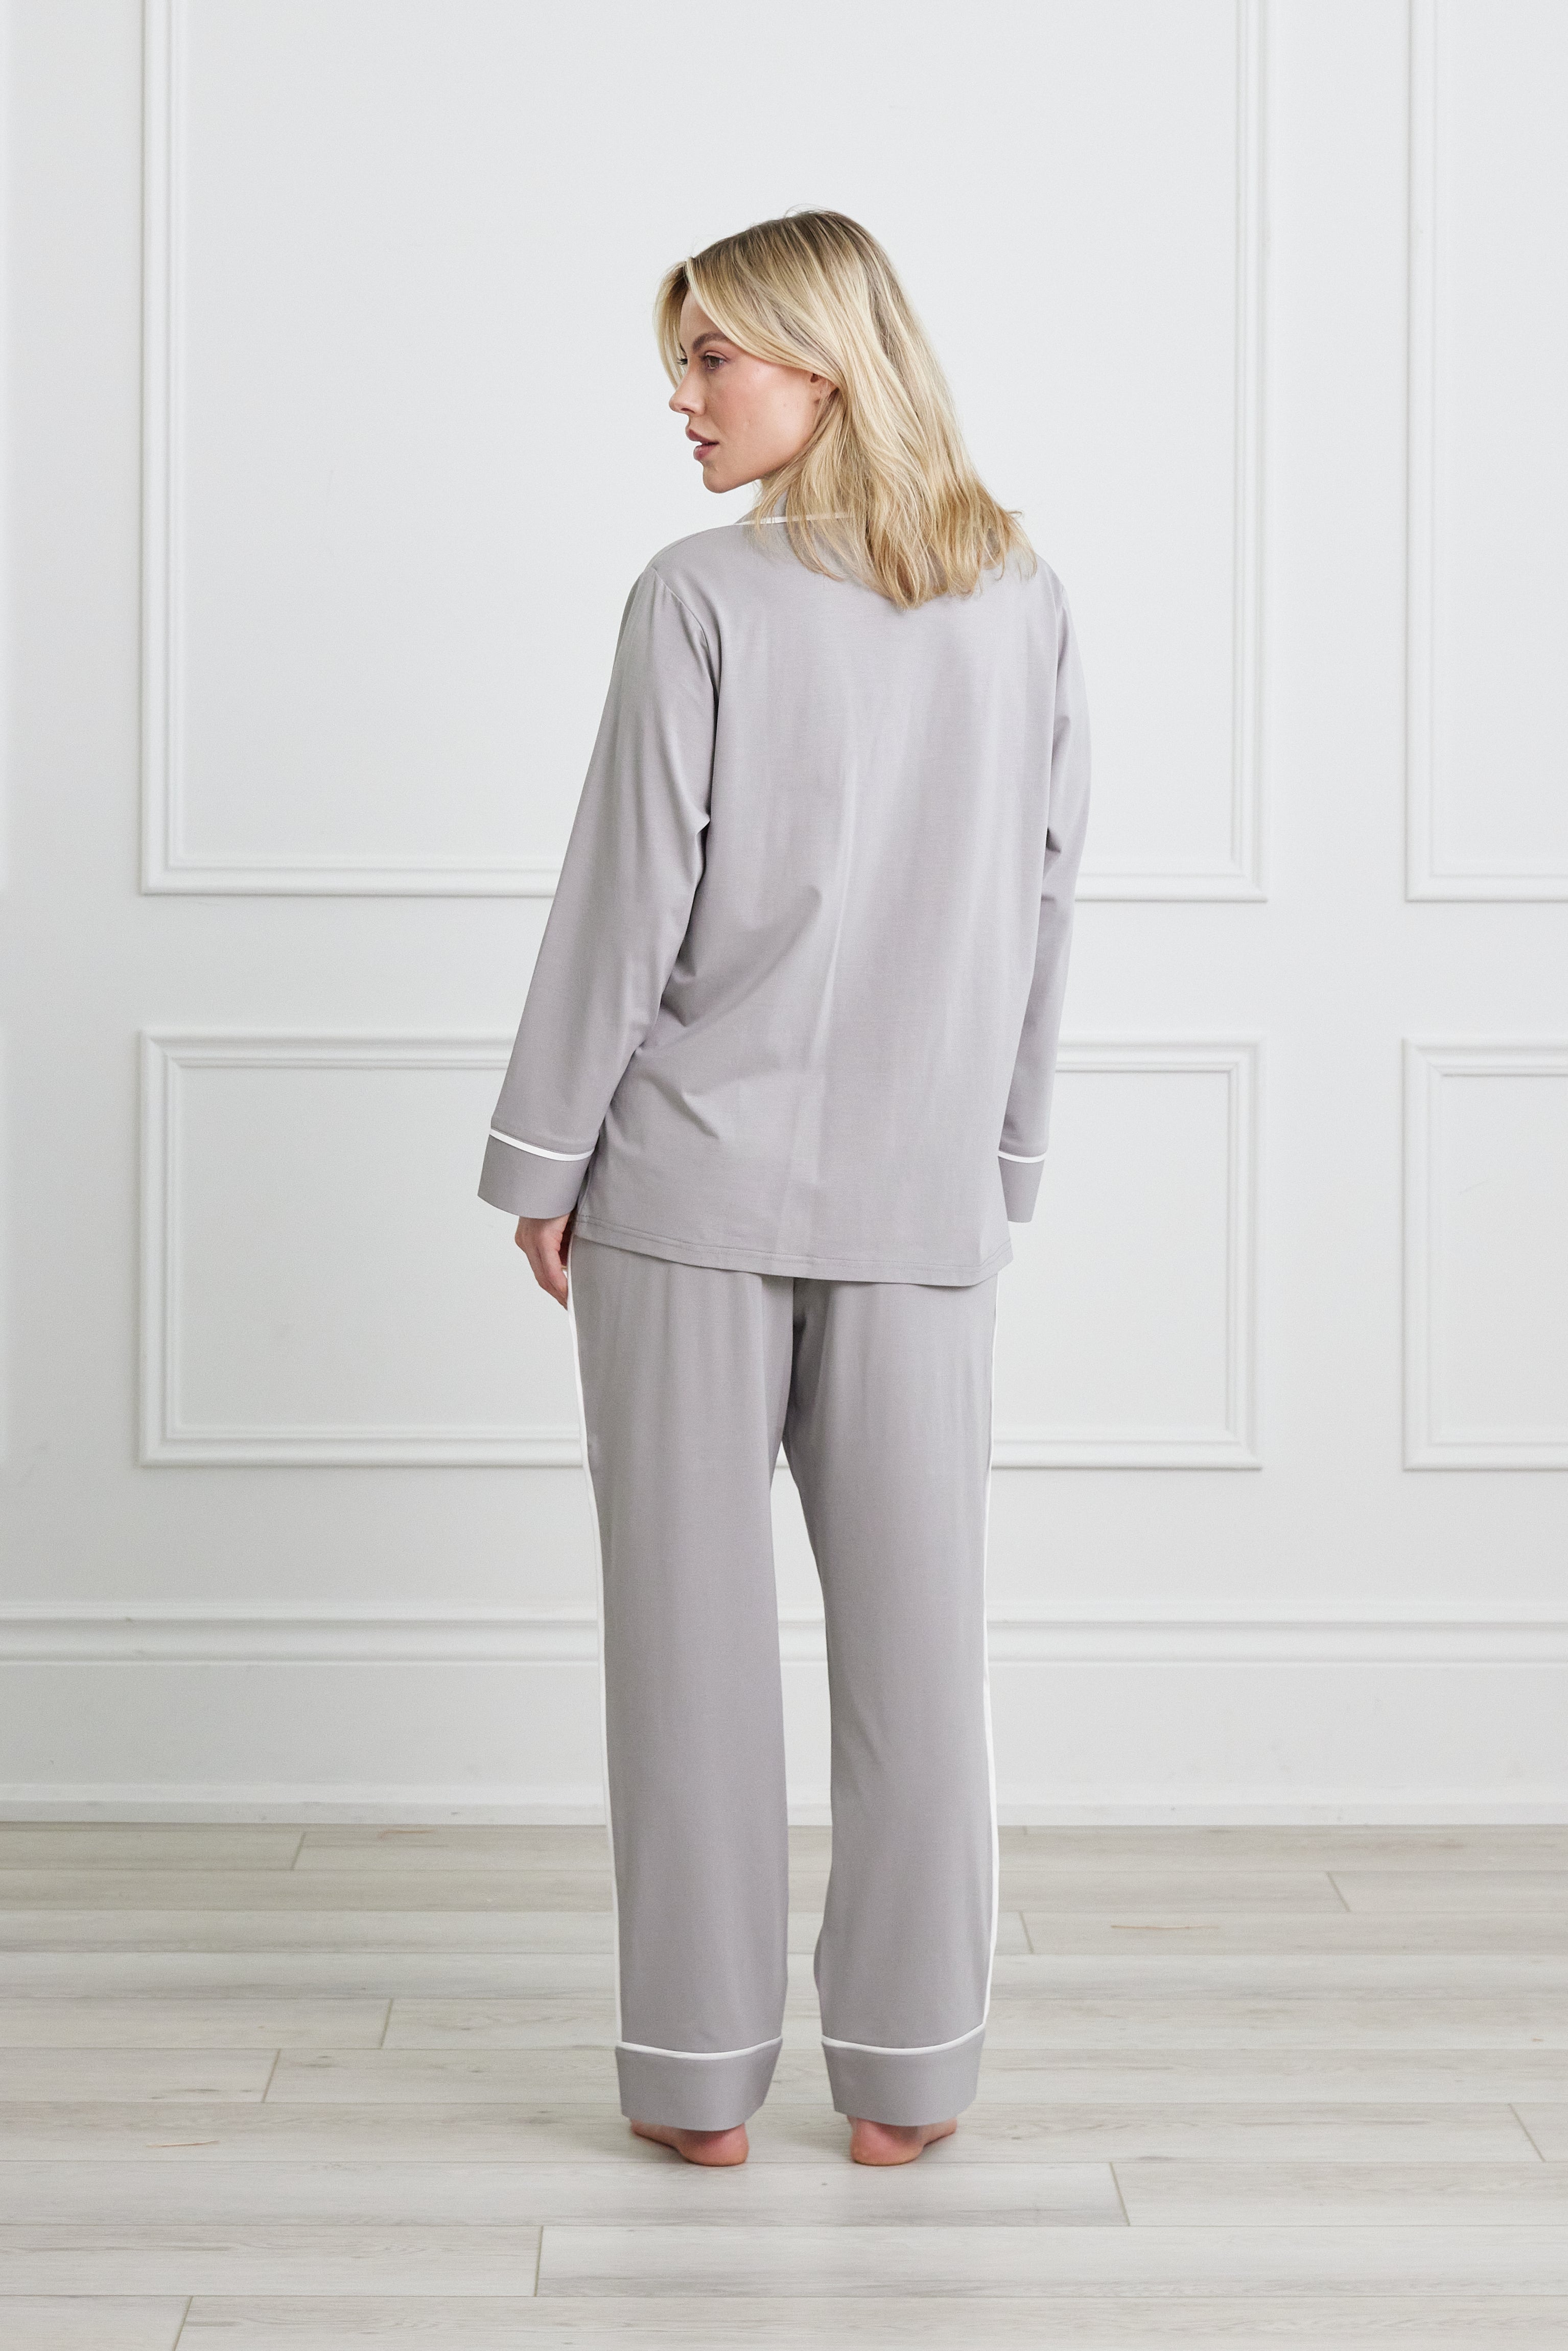 KIP Luxe Stretch Cotton Pajama Set in Haze